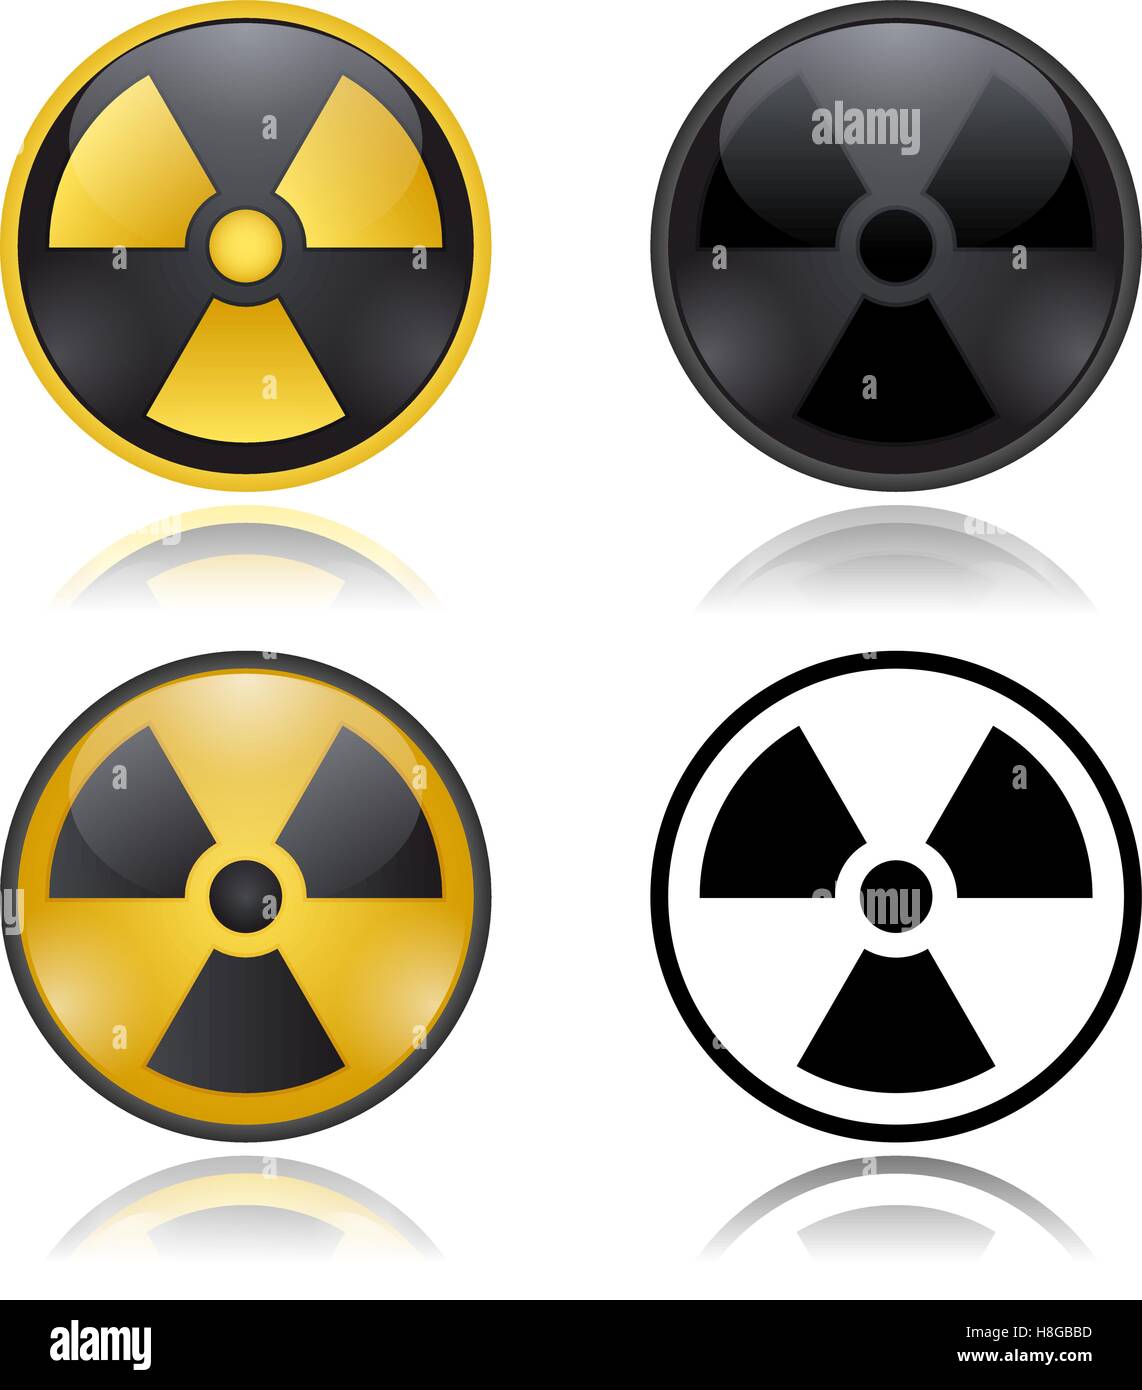 Radioaktivität Warnzeichen. Vektor-Illustration Eps 10 Stock Vektor